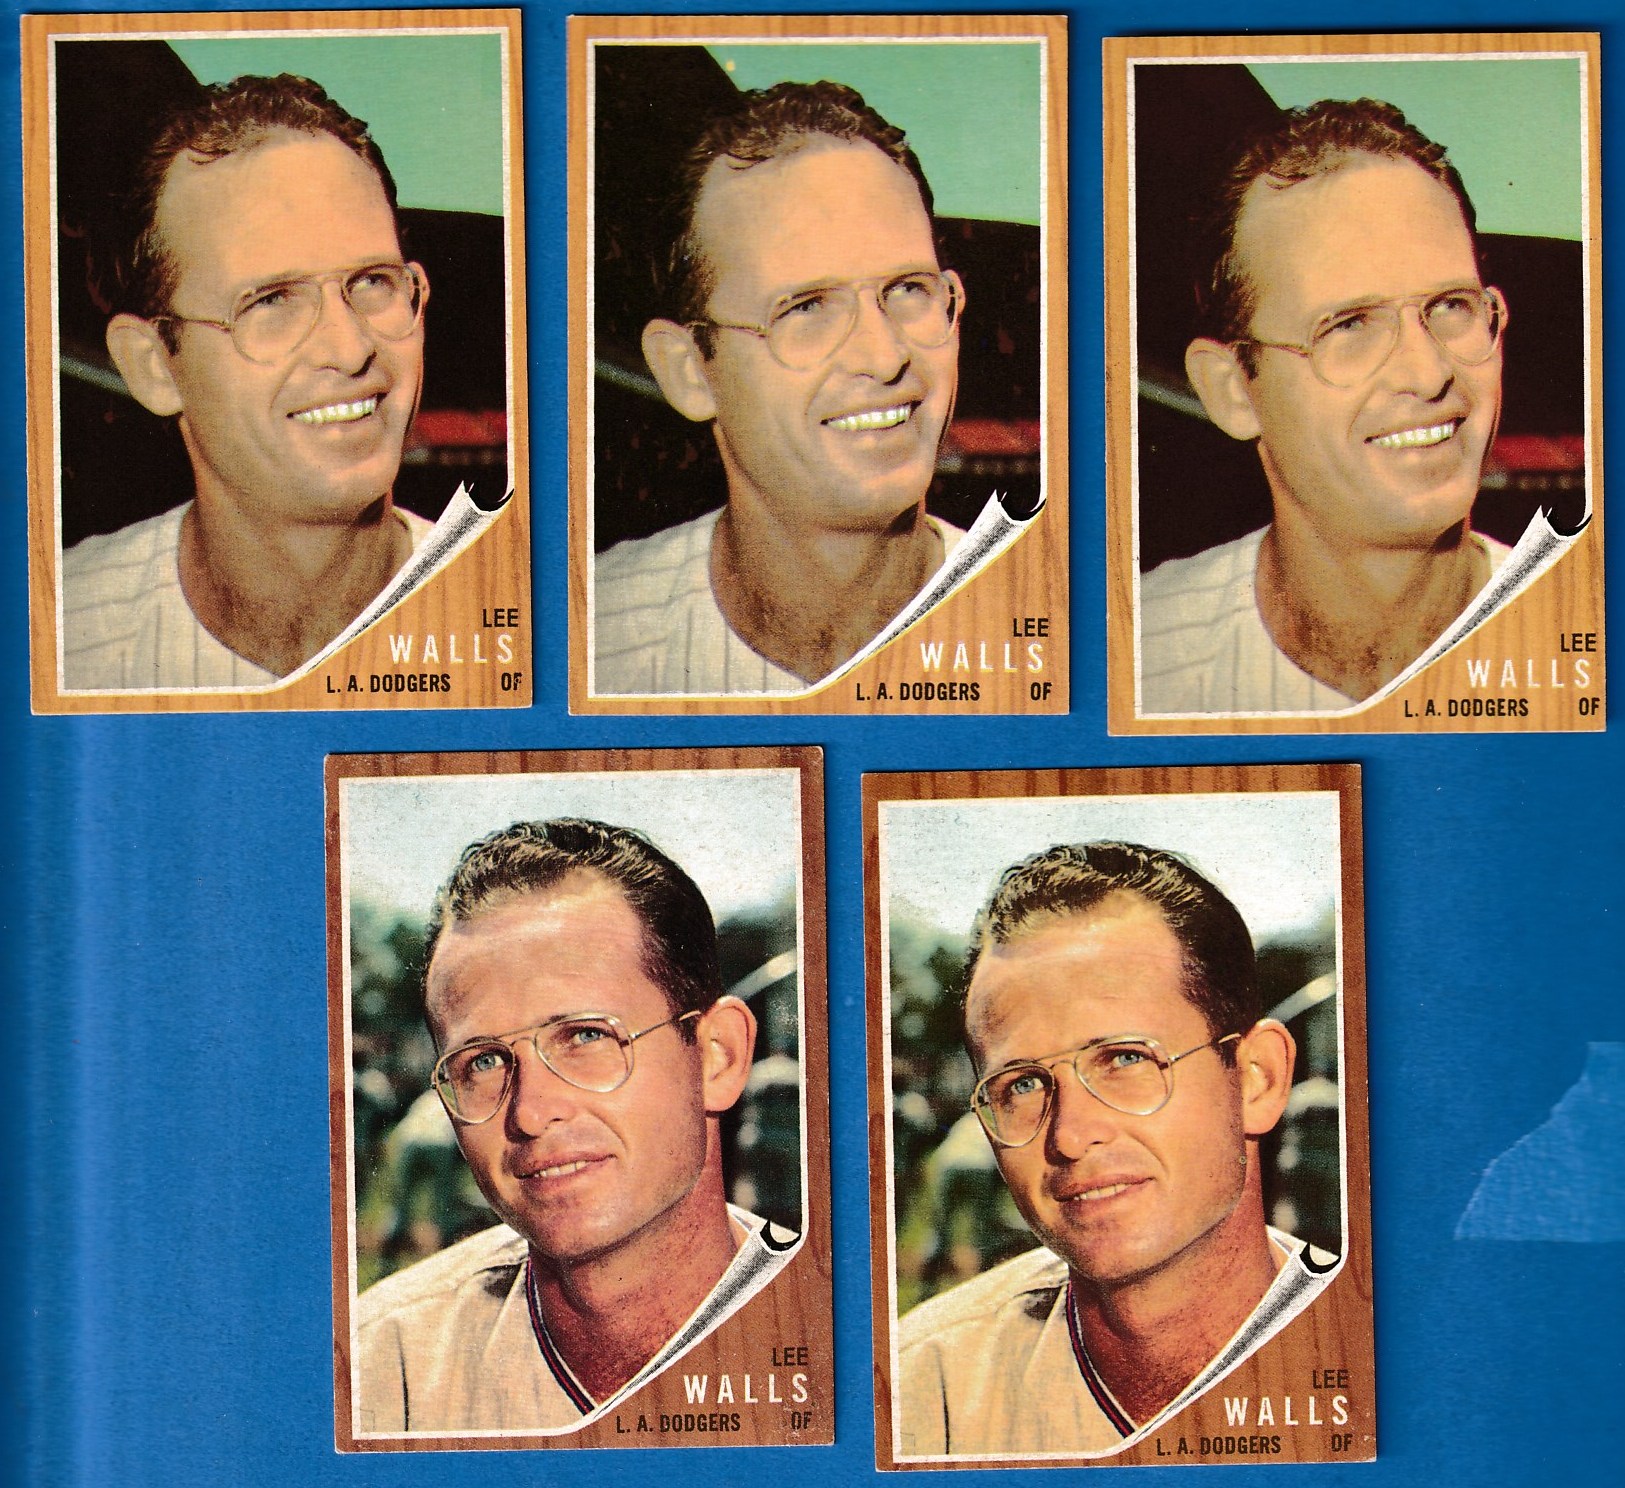 1962 Topps #129B Lee Walls [VAR:Green Sky] (Dodgers) Baseball cards value